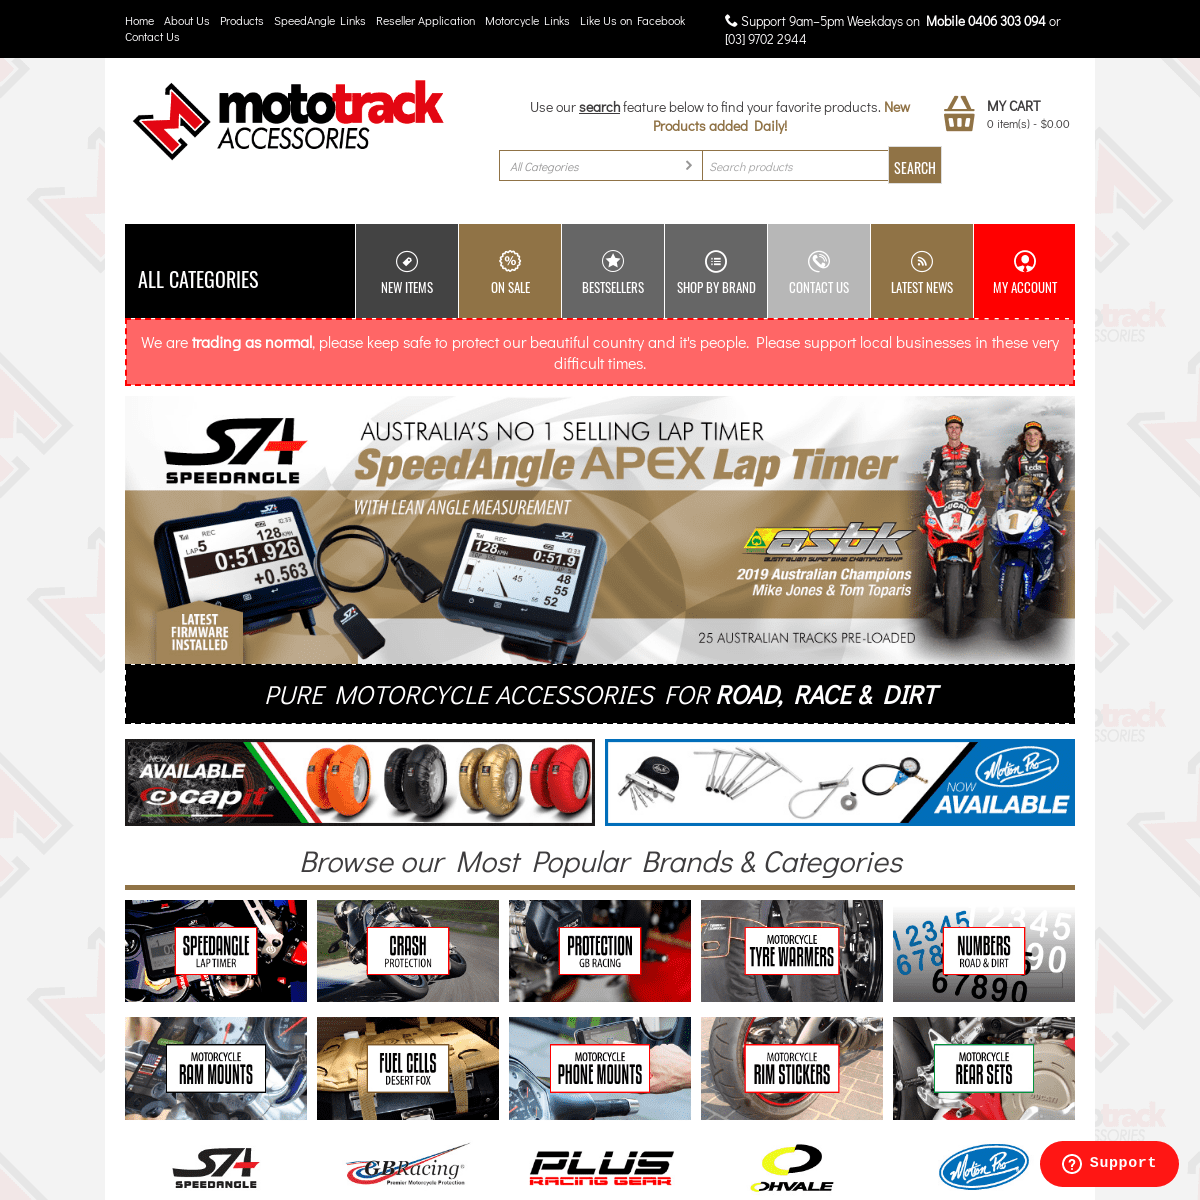 A complete backup of mototrack.com.au